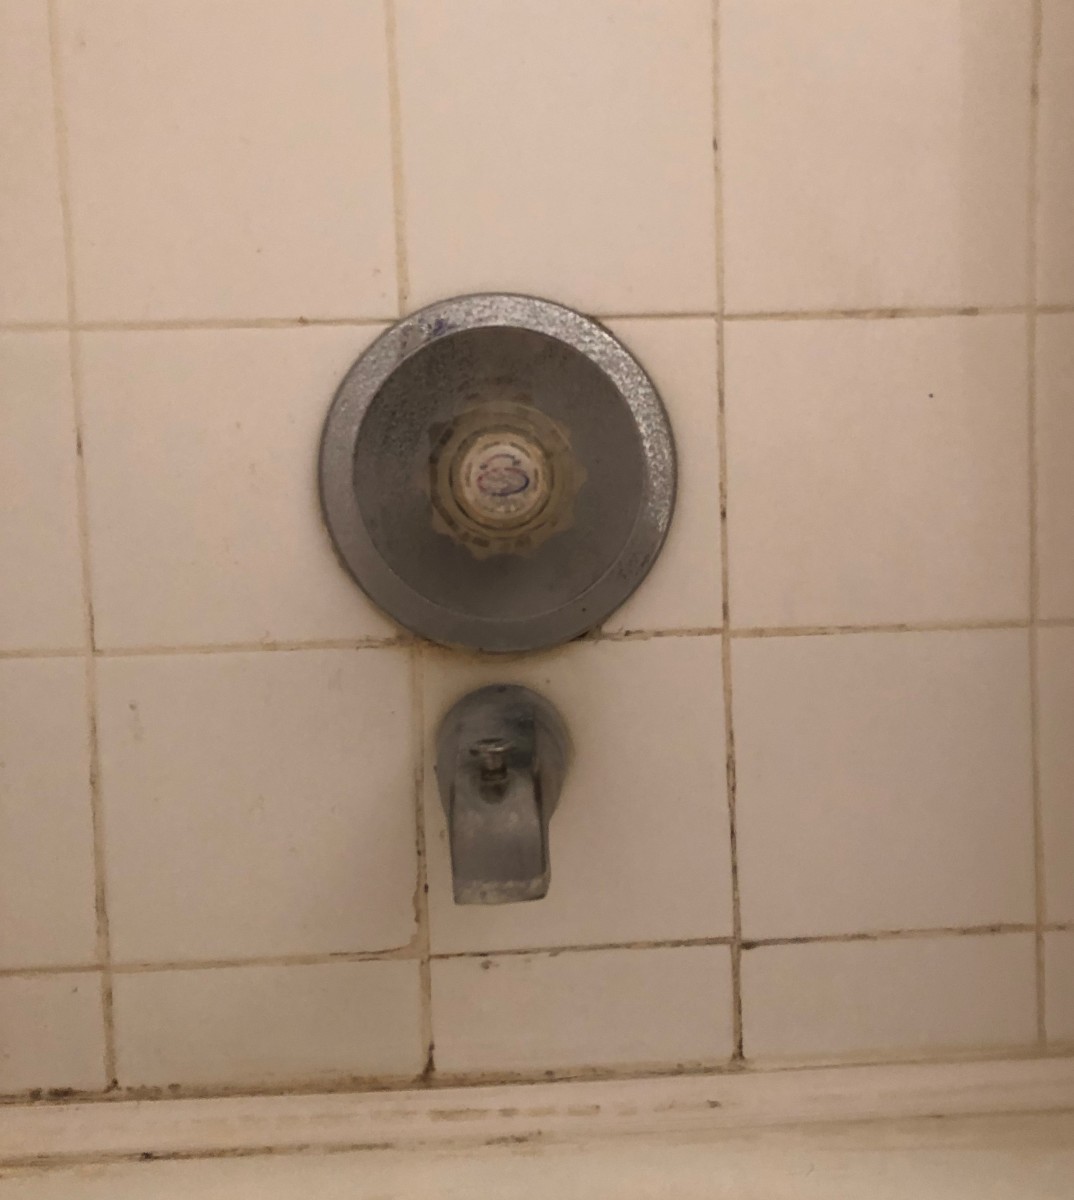 Replace A Single Handle Shower Valve, Bathtub Water Valve Types